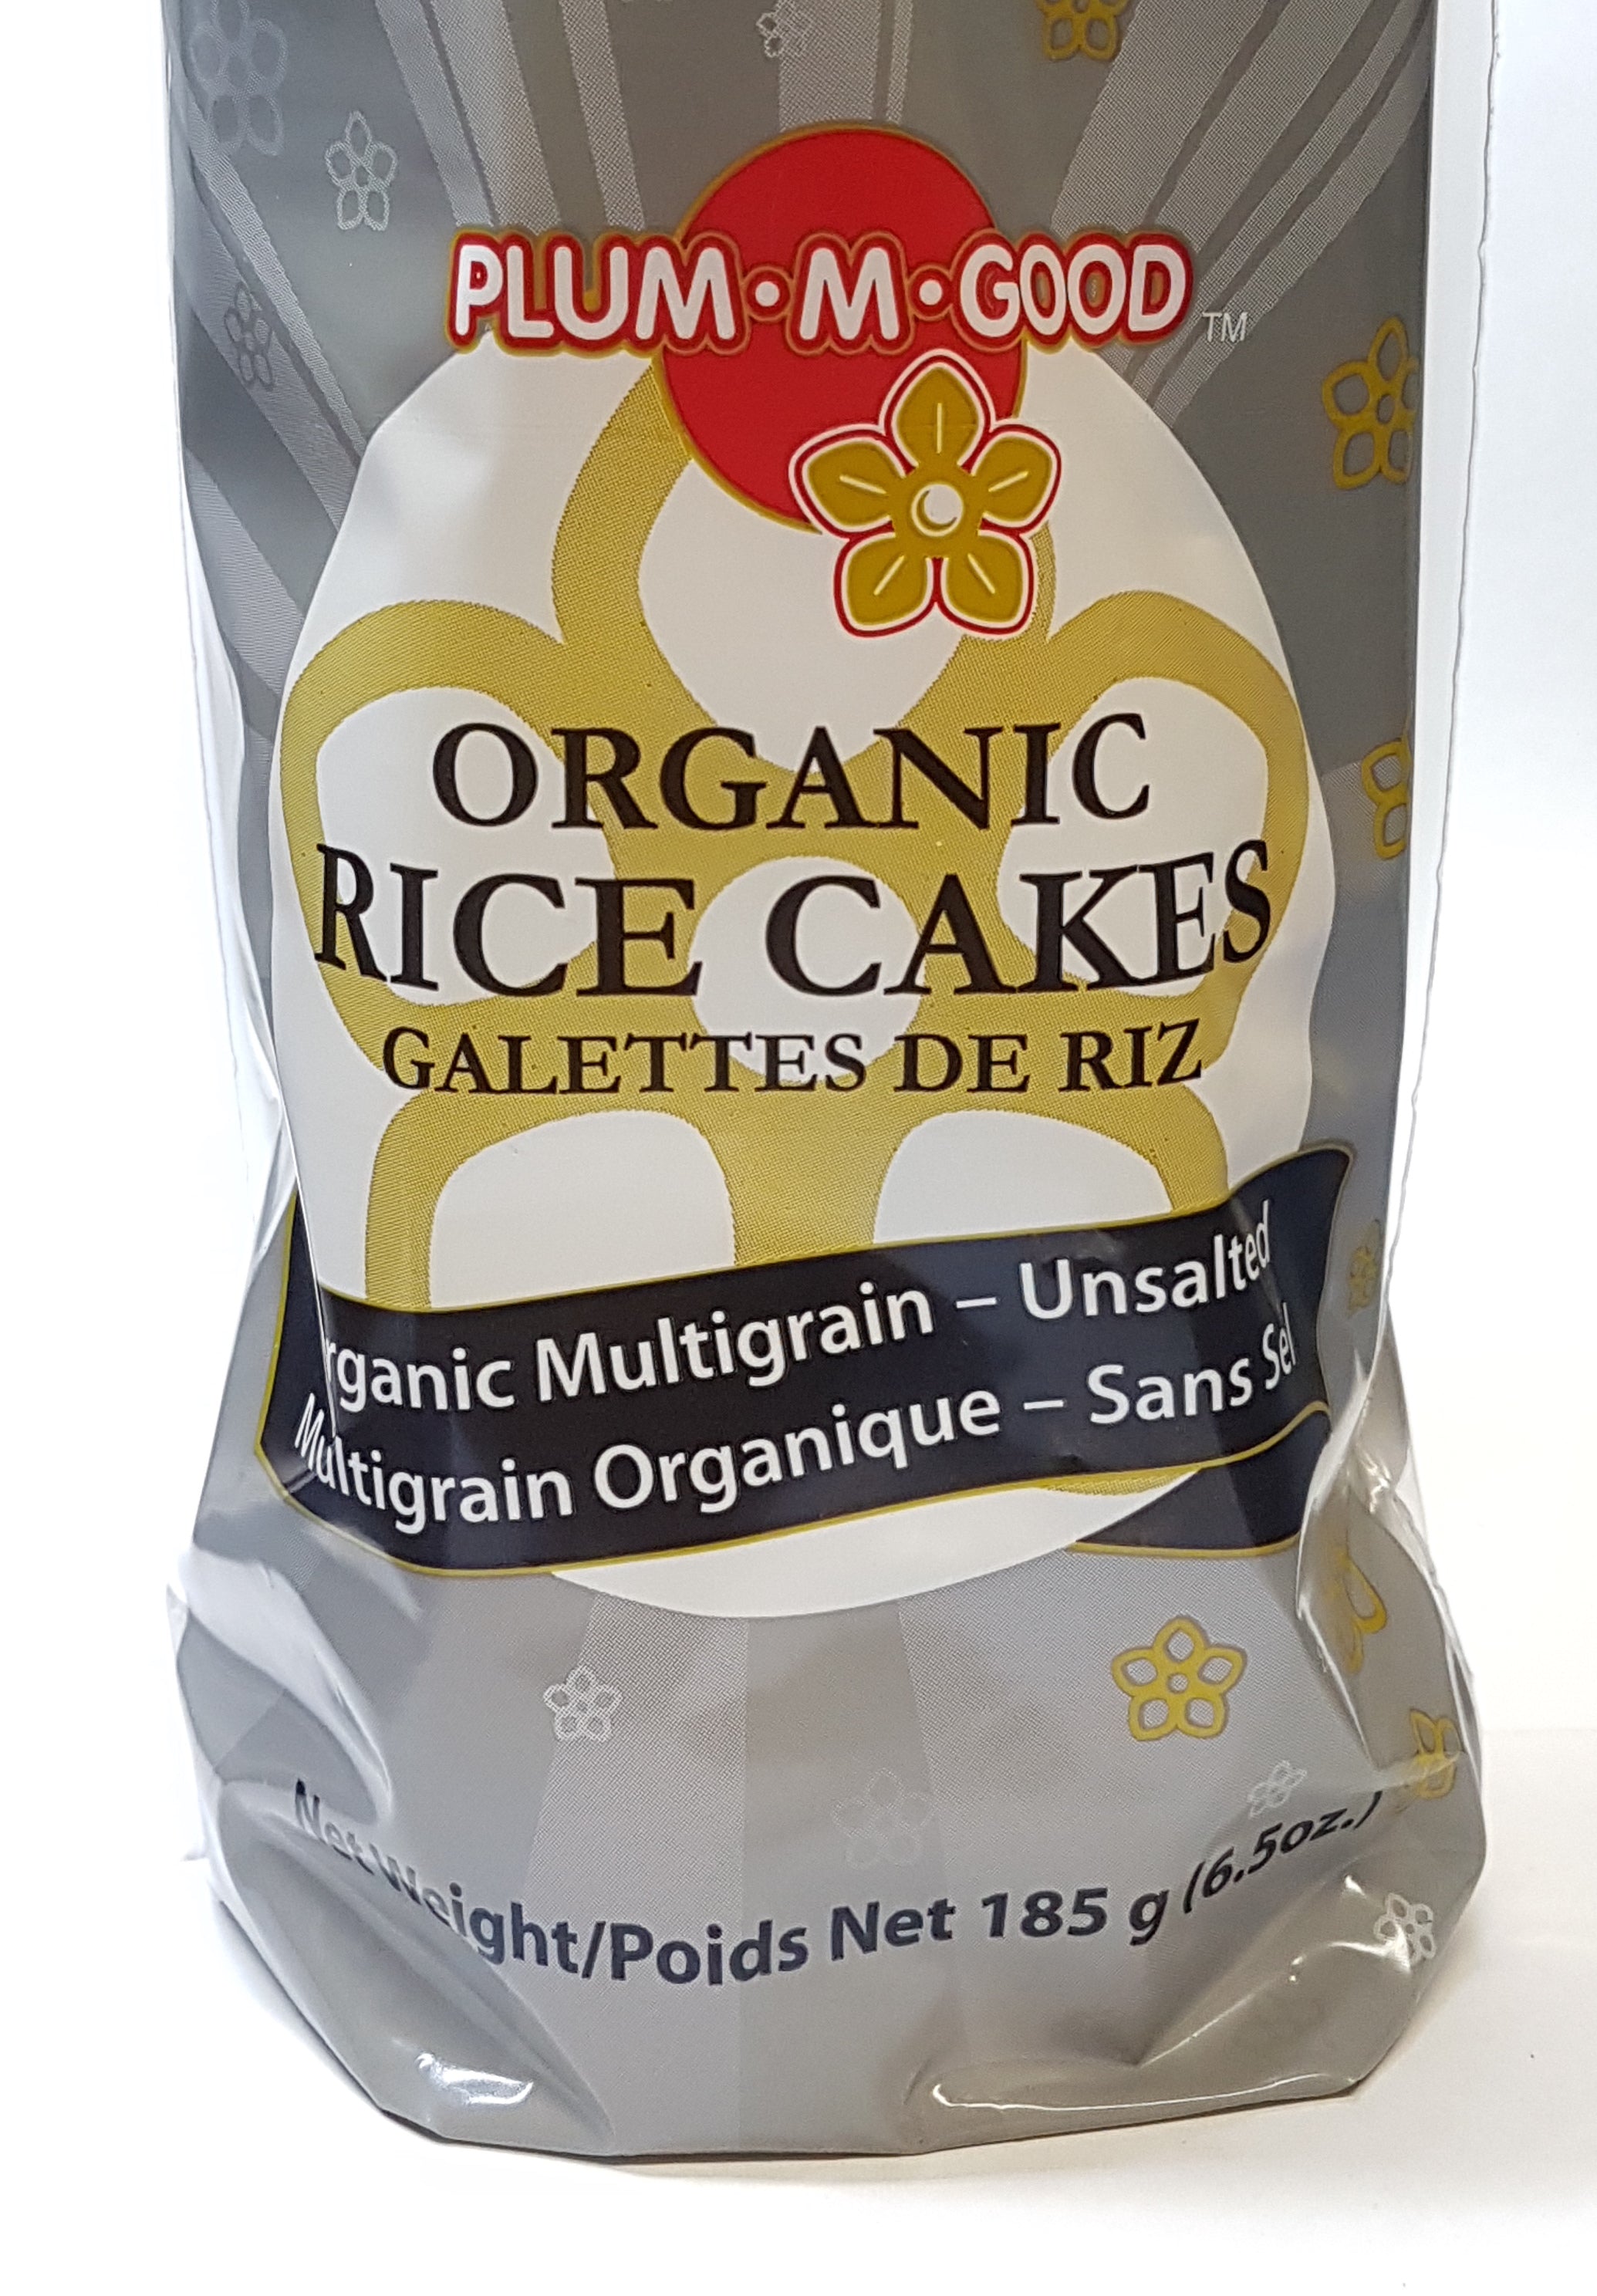 Plum M Good Organic Multigrain Rice Cake - Unsalted (185g) - Lifestyle Markets